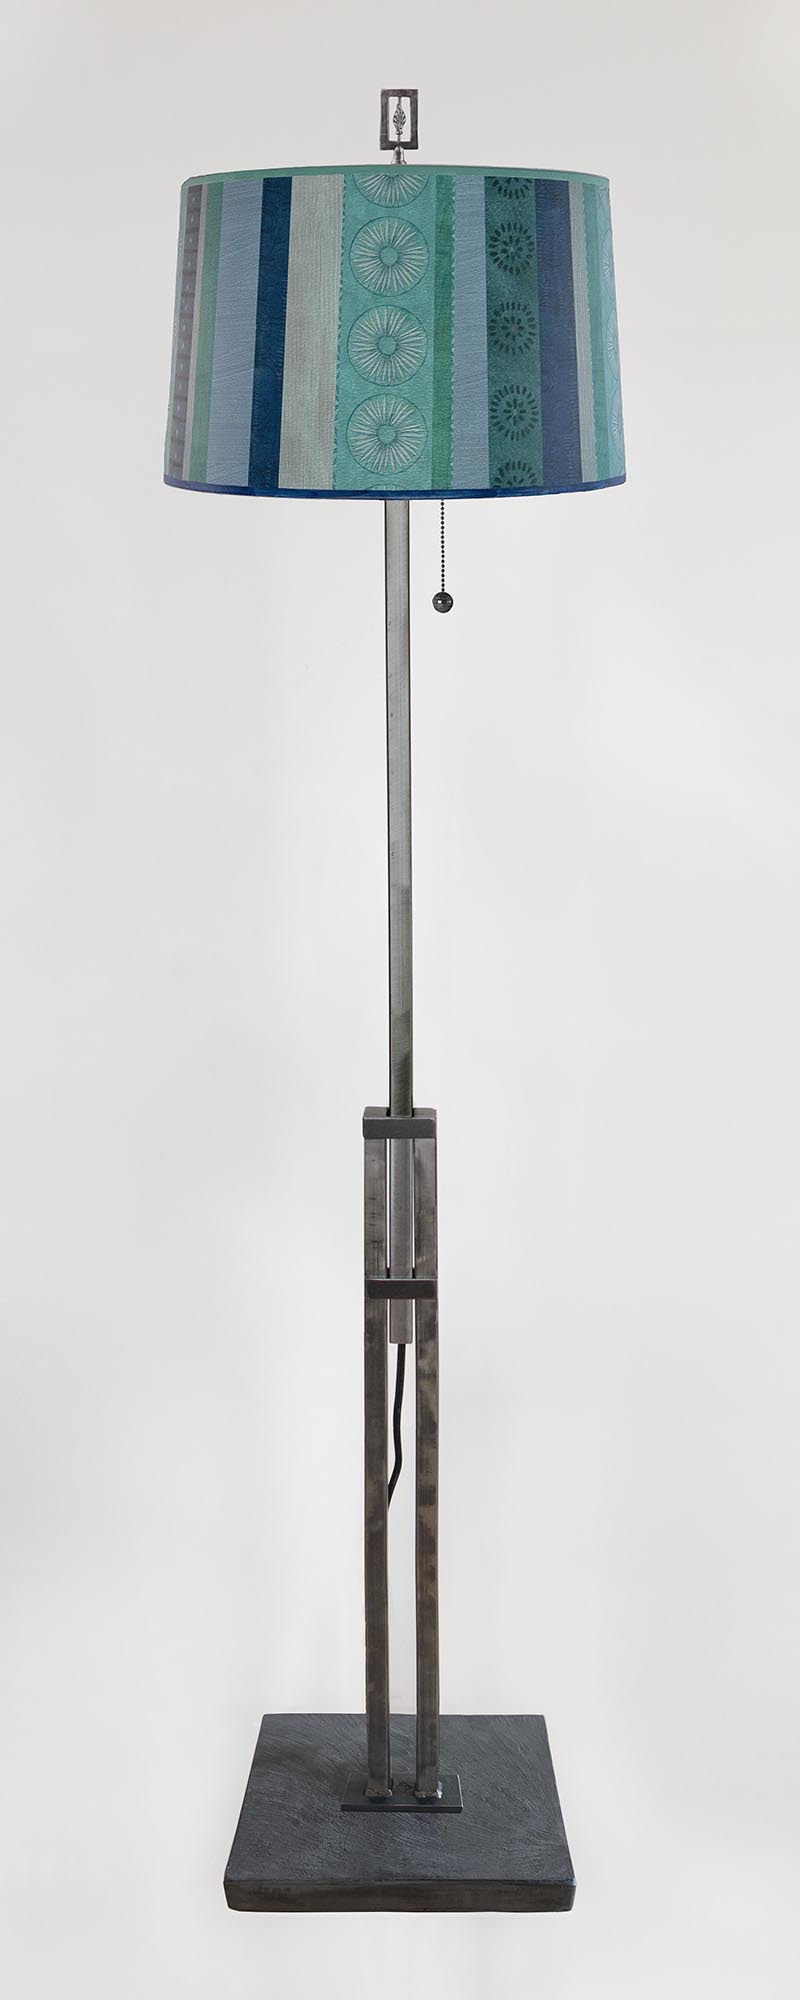 Janna Ugone &amp; Co Floor Lamps Adjustable-Height Steel Floor Lamp with Large Drum Shade in Serape Waters